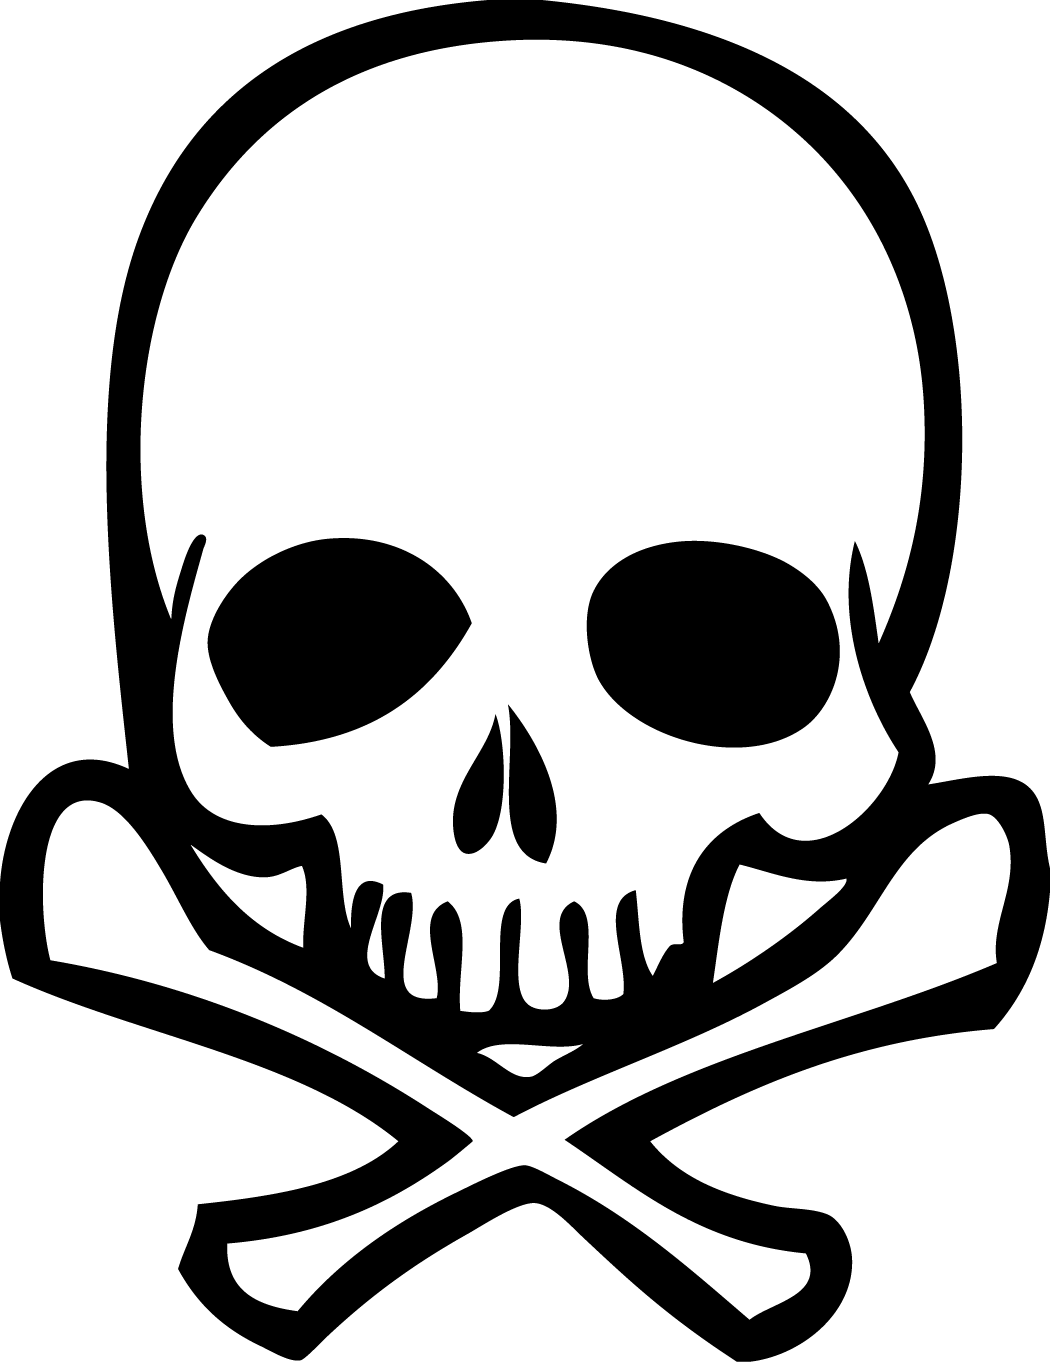 Free Skull And Cross Bones, Download Free Skull And Cross Bones png images, Free  ClipArts on Clipart Library